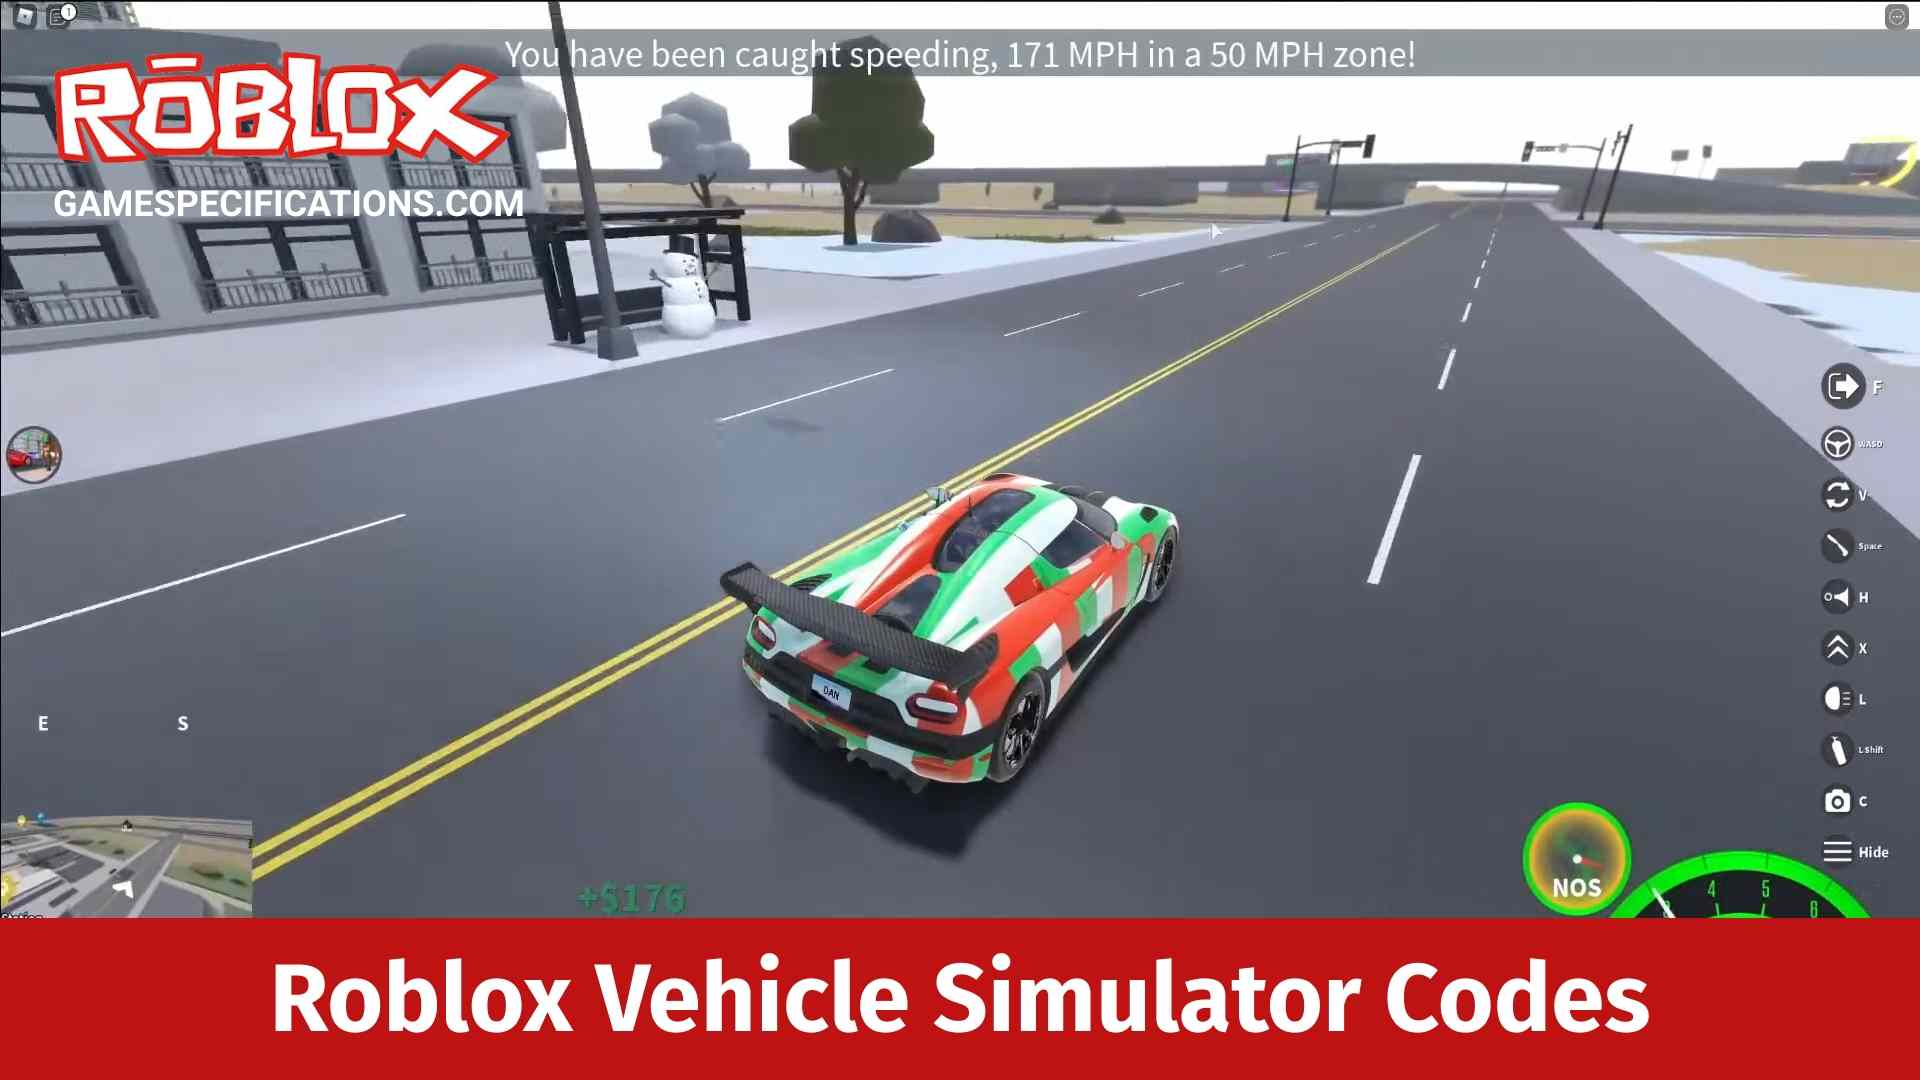 Roblox Vehicle Simulator Codes July 2021 Game Specifications - all codes for vehicle simulator on roblox